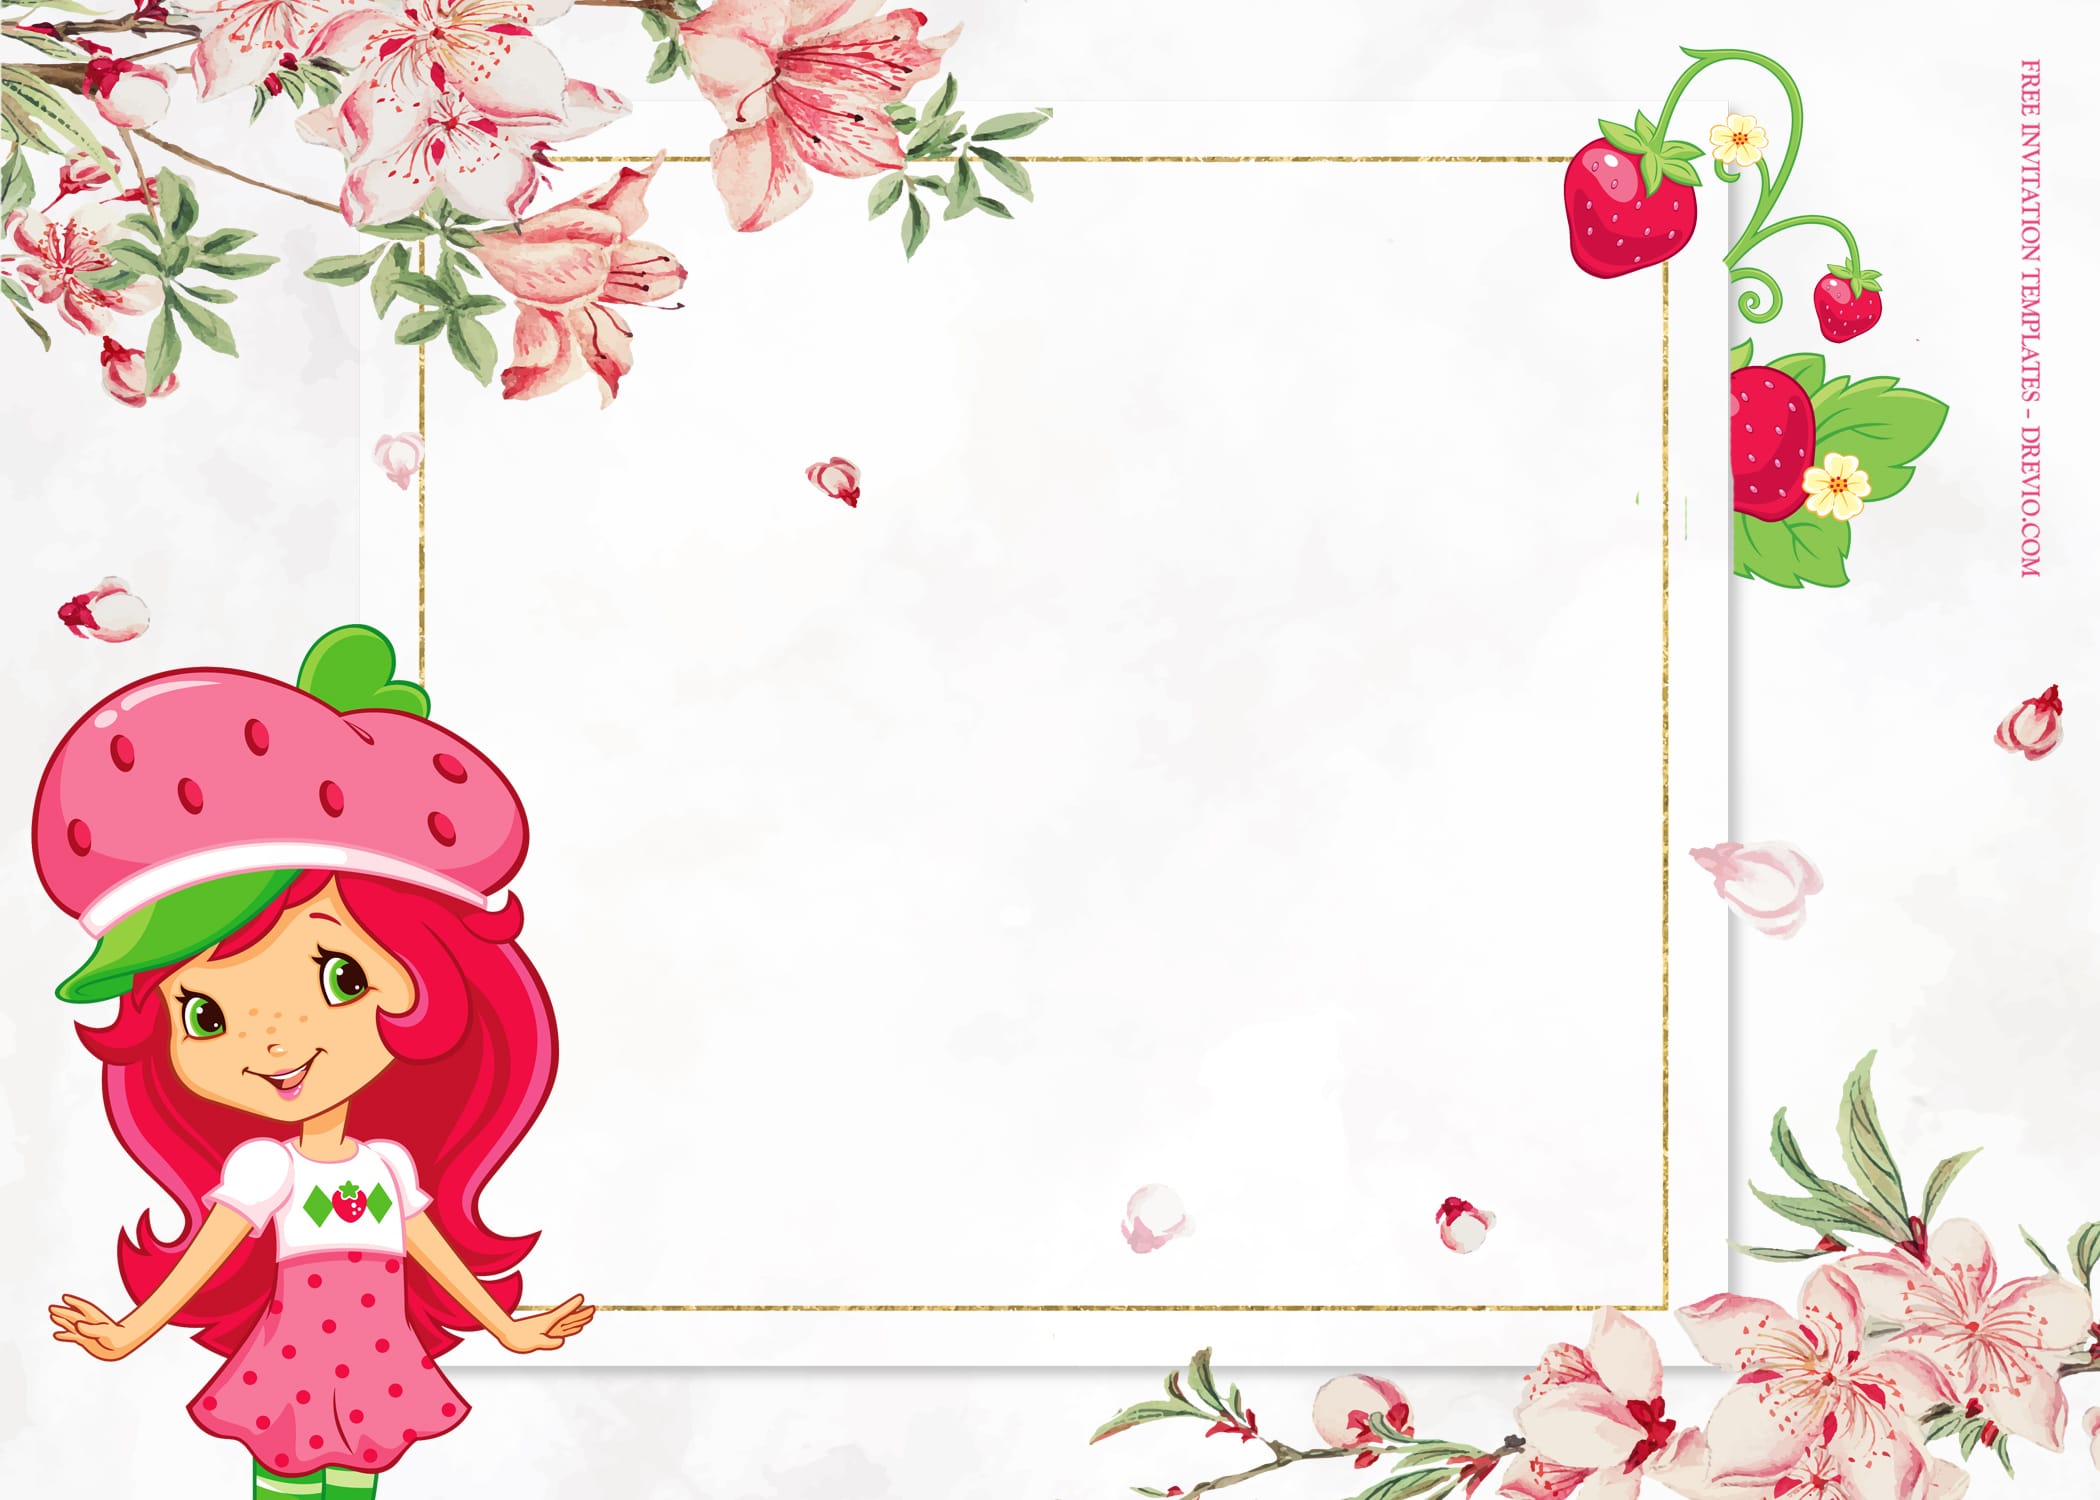 8+ Strawberry Shortcake With Sakura Blossom Birthday Invitation Templates Type One